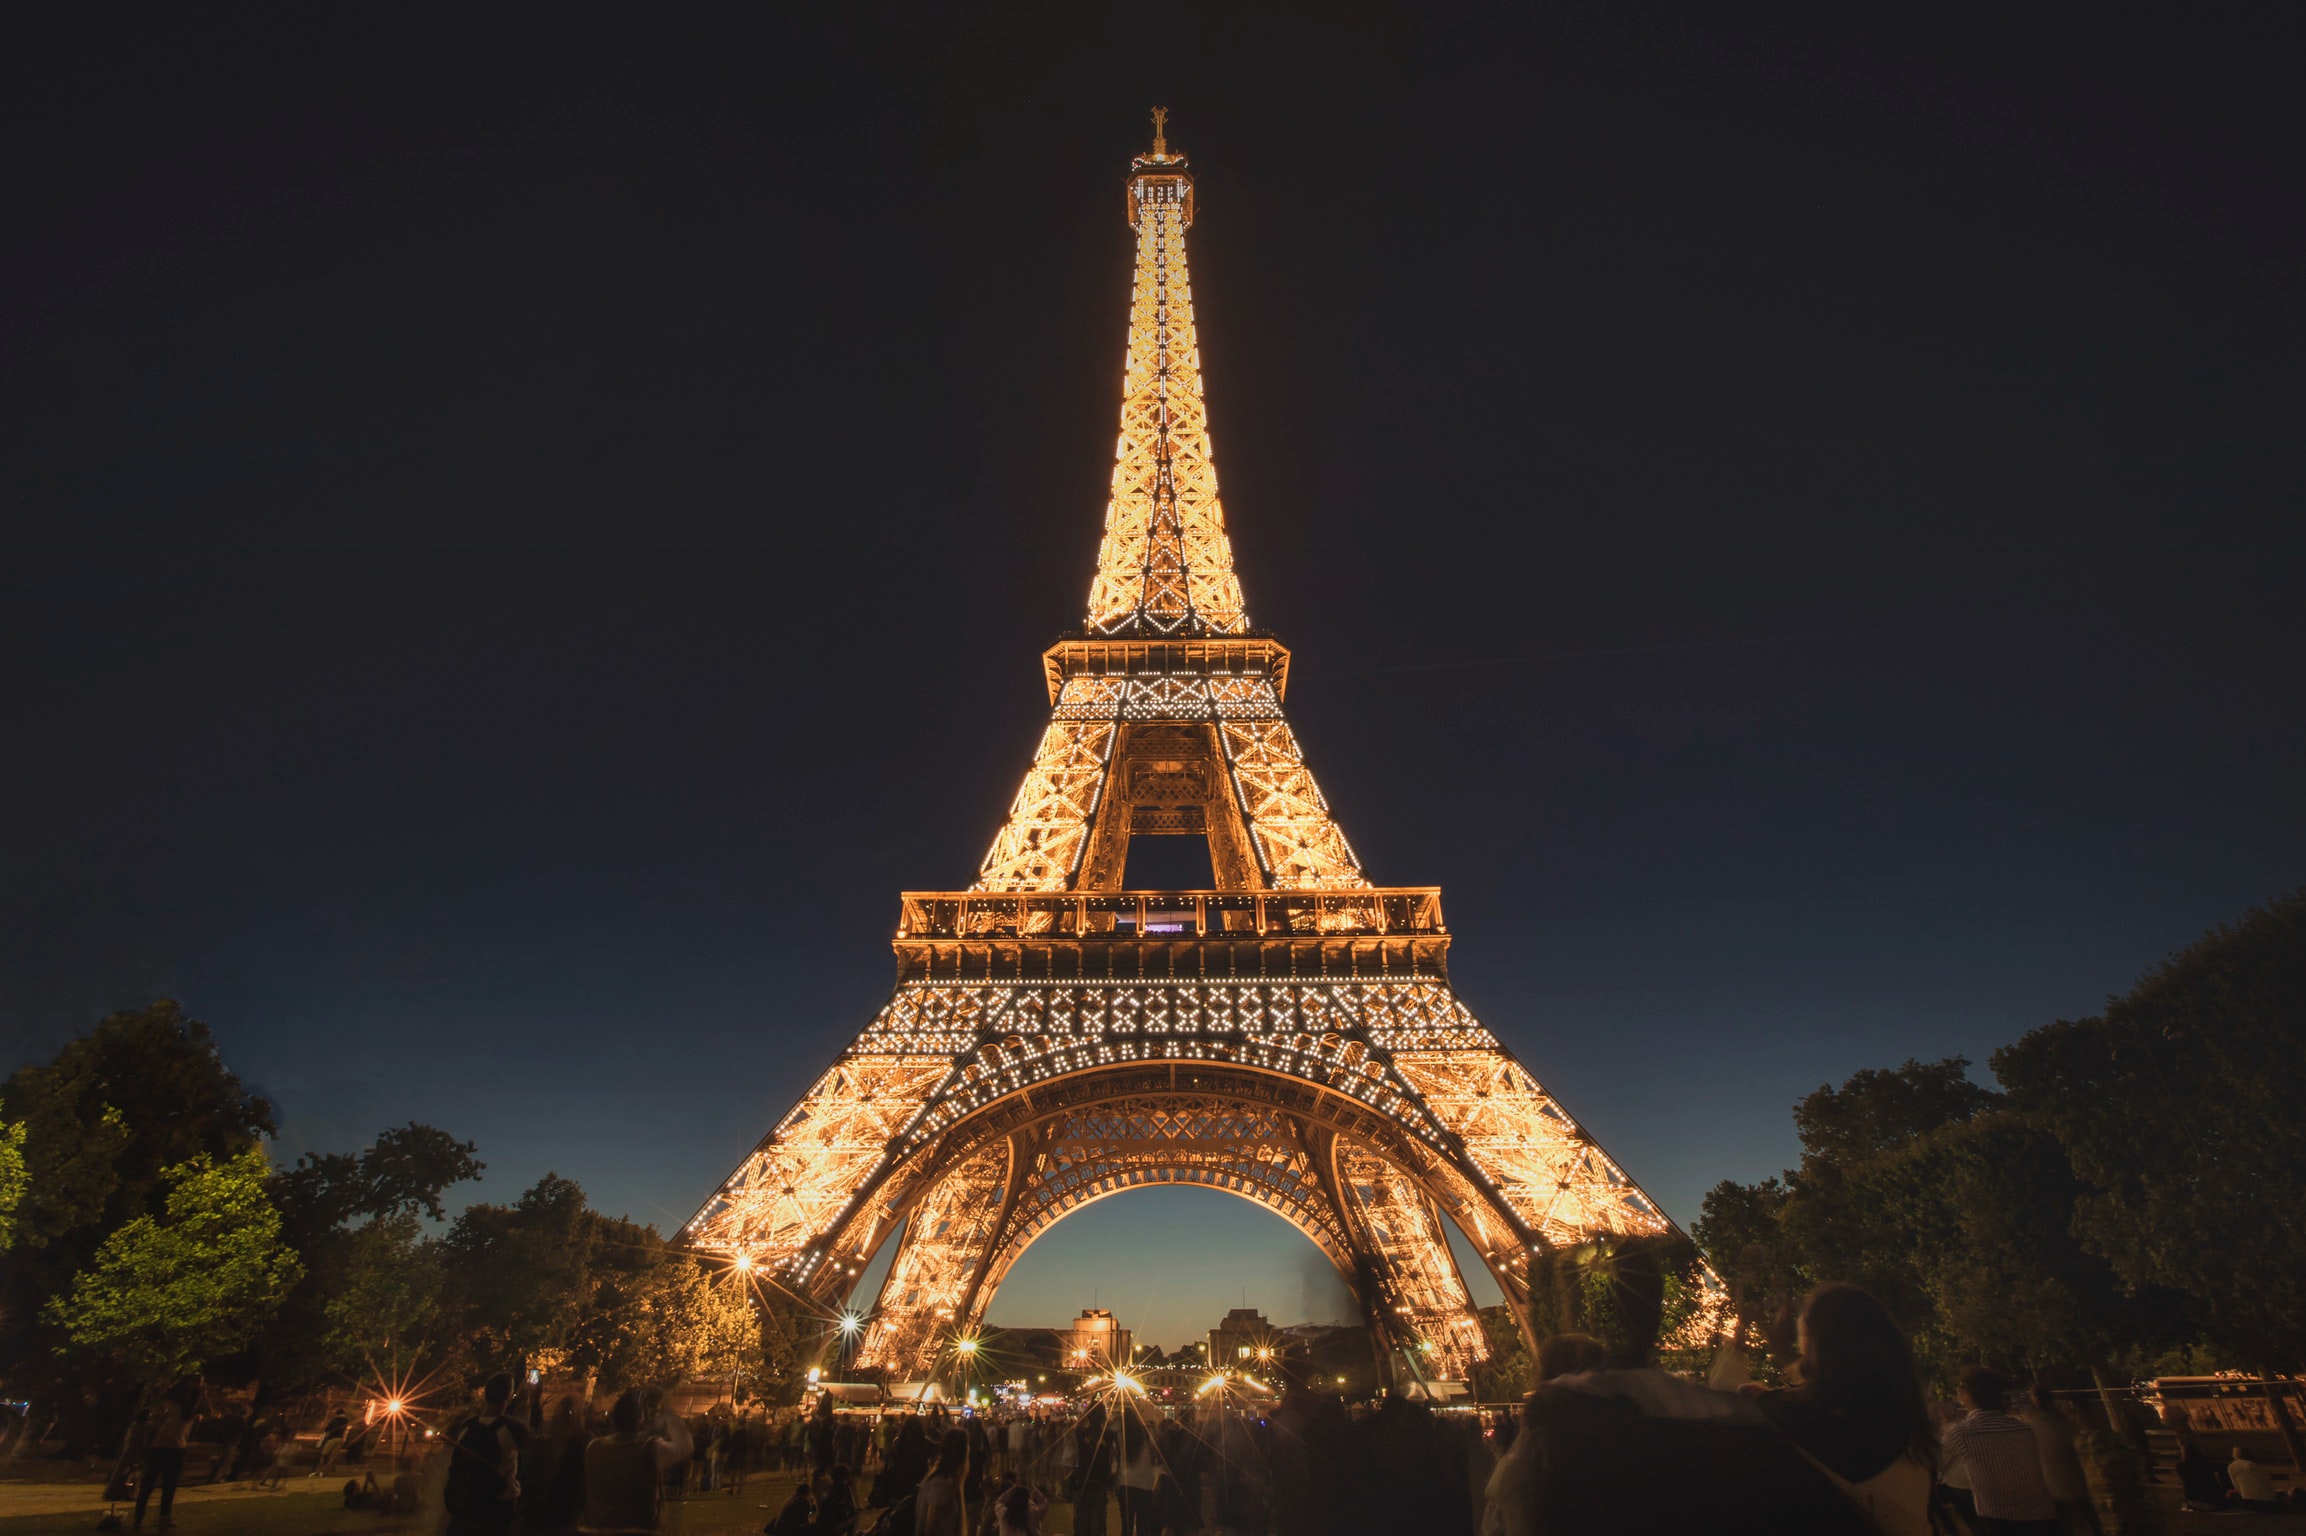 The Eiffel Tower at nightfall against the sky